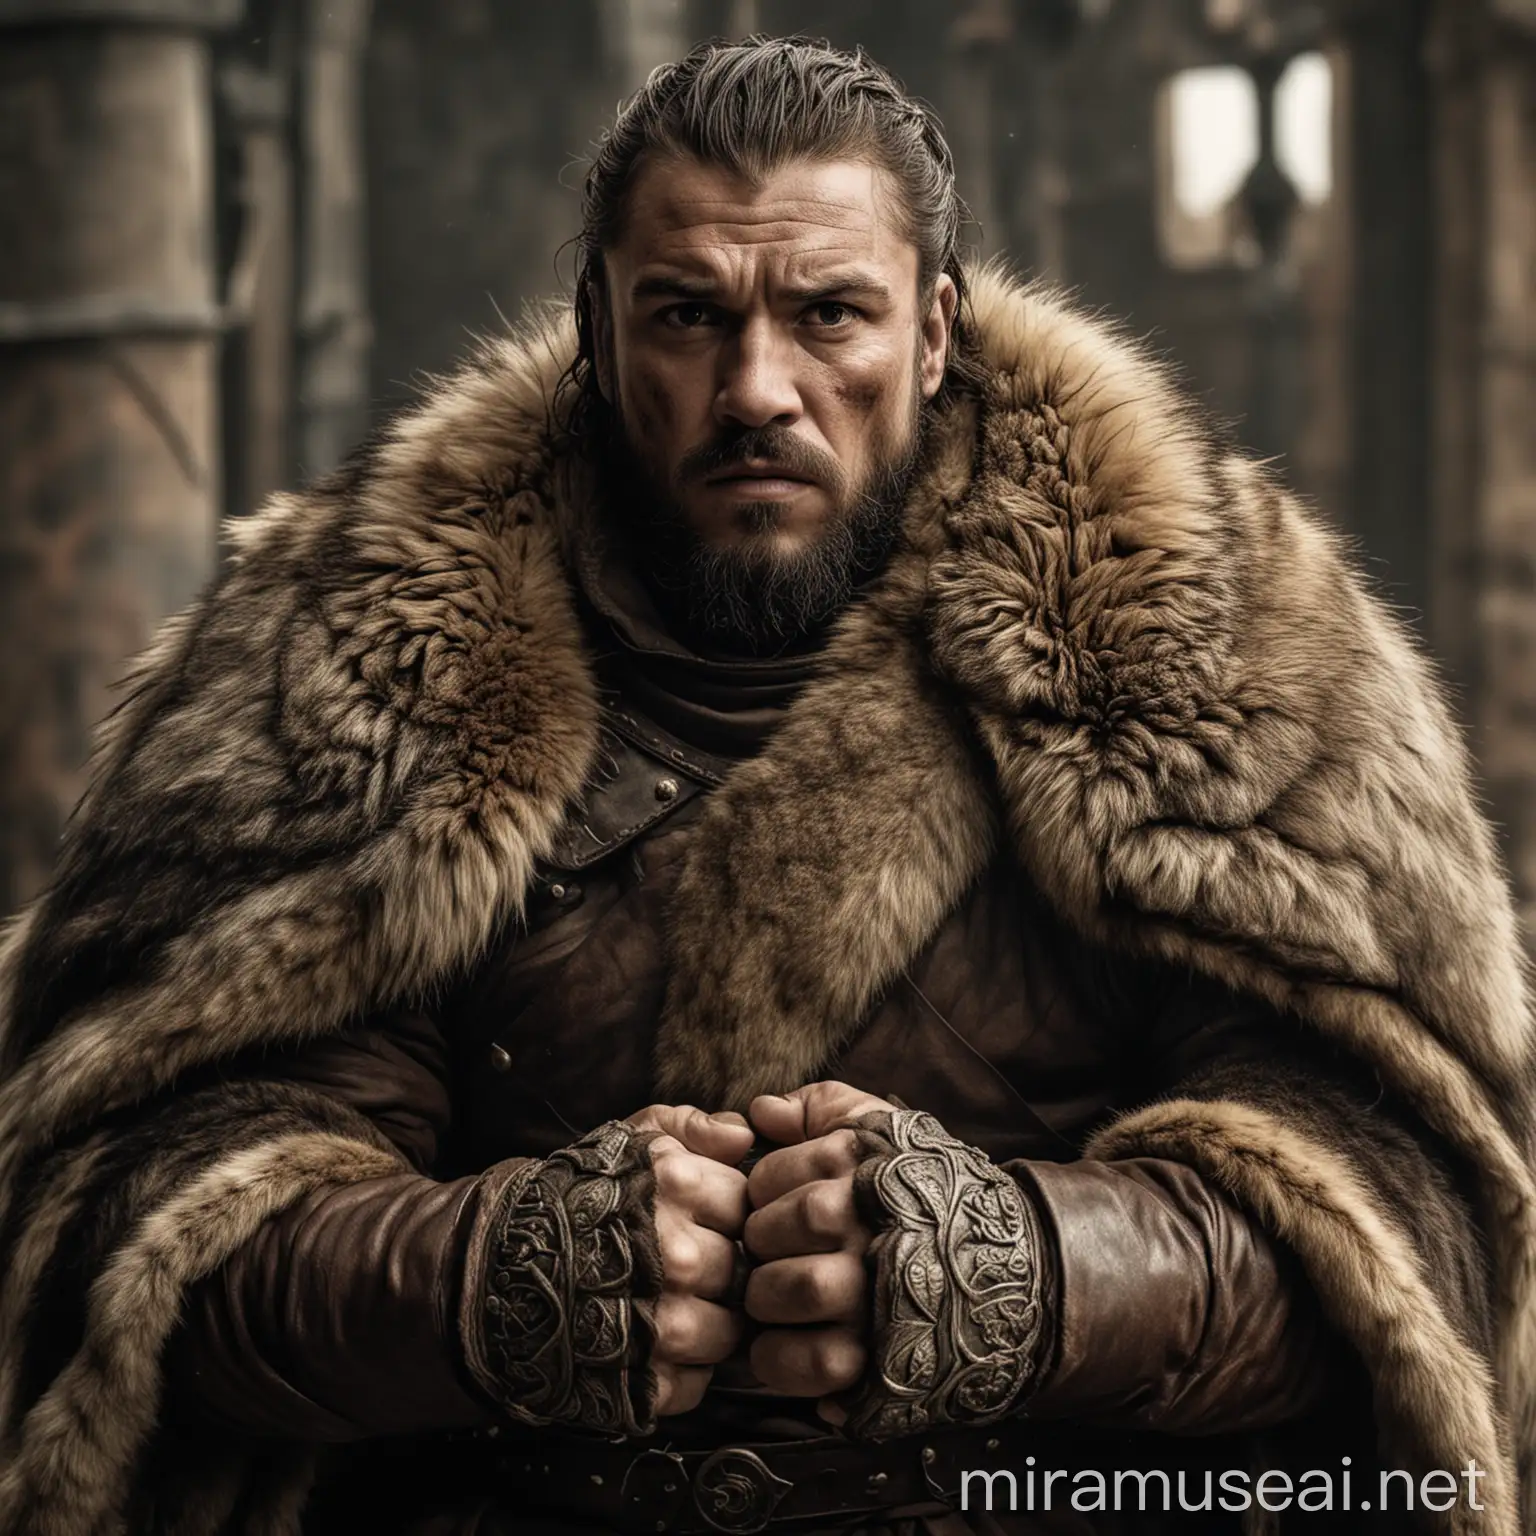 Formidable Older Warrior in Fur Garb Game of Thrones Fan Art